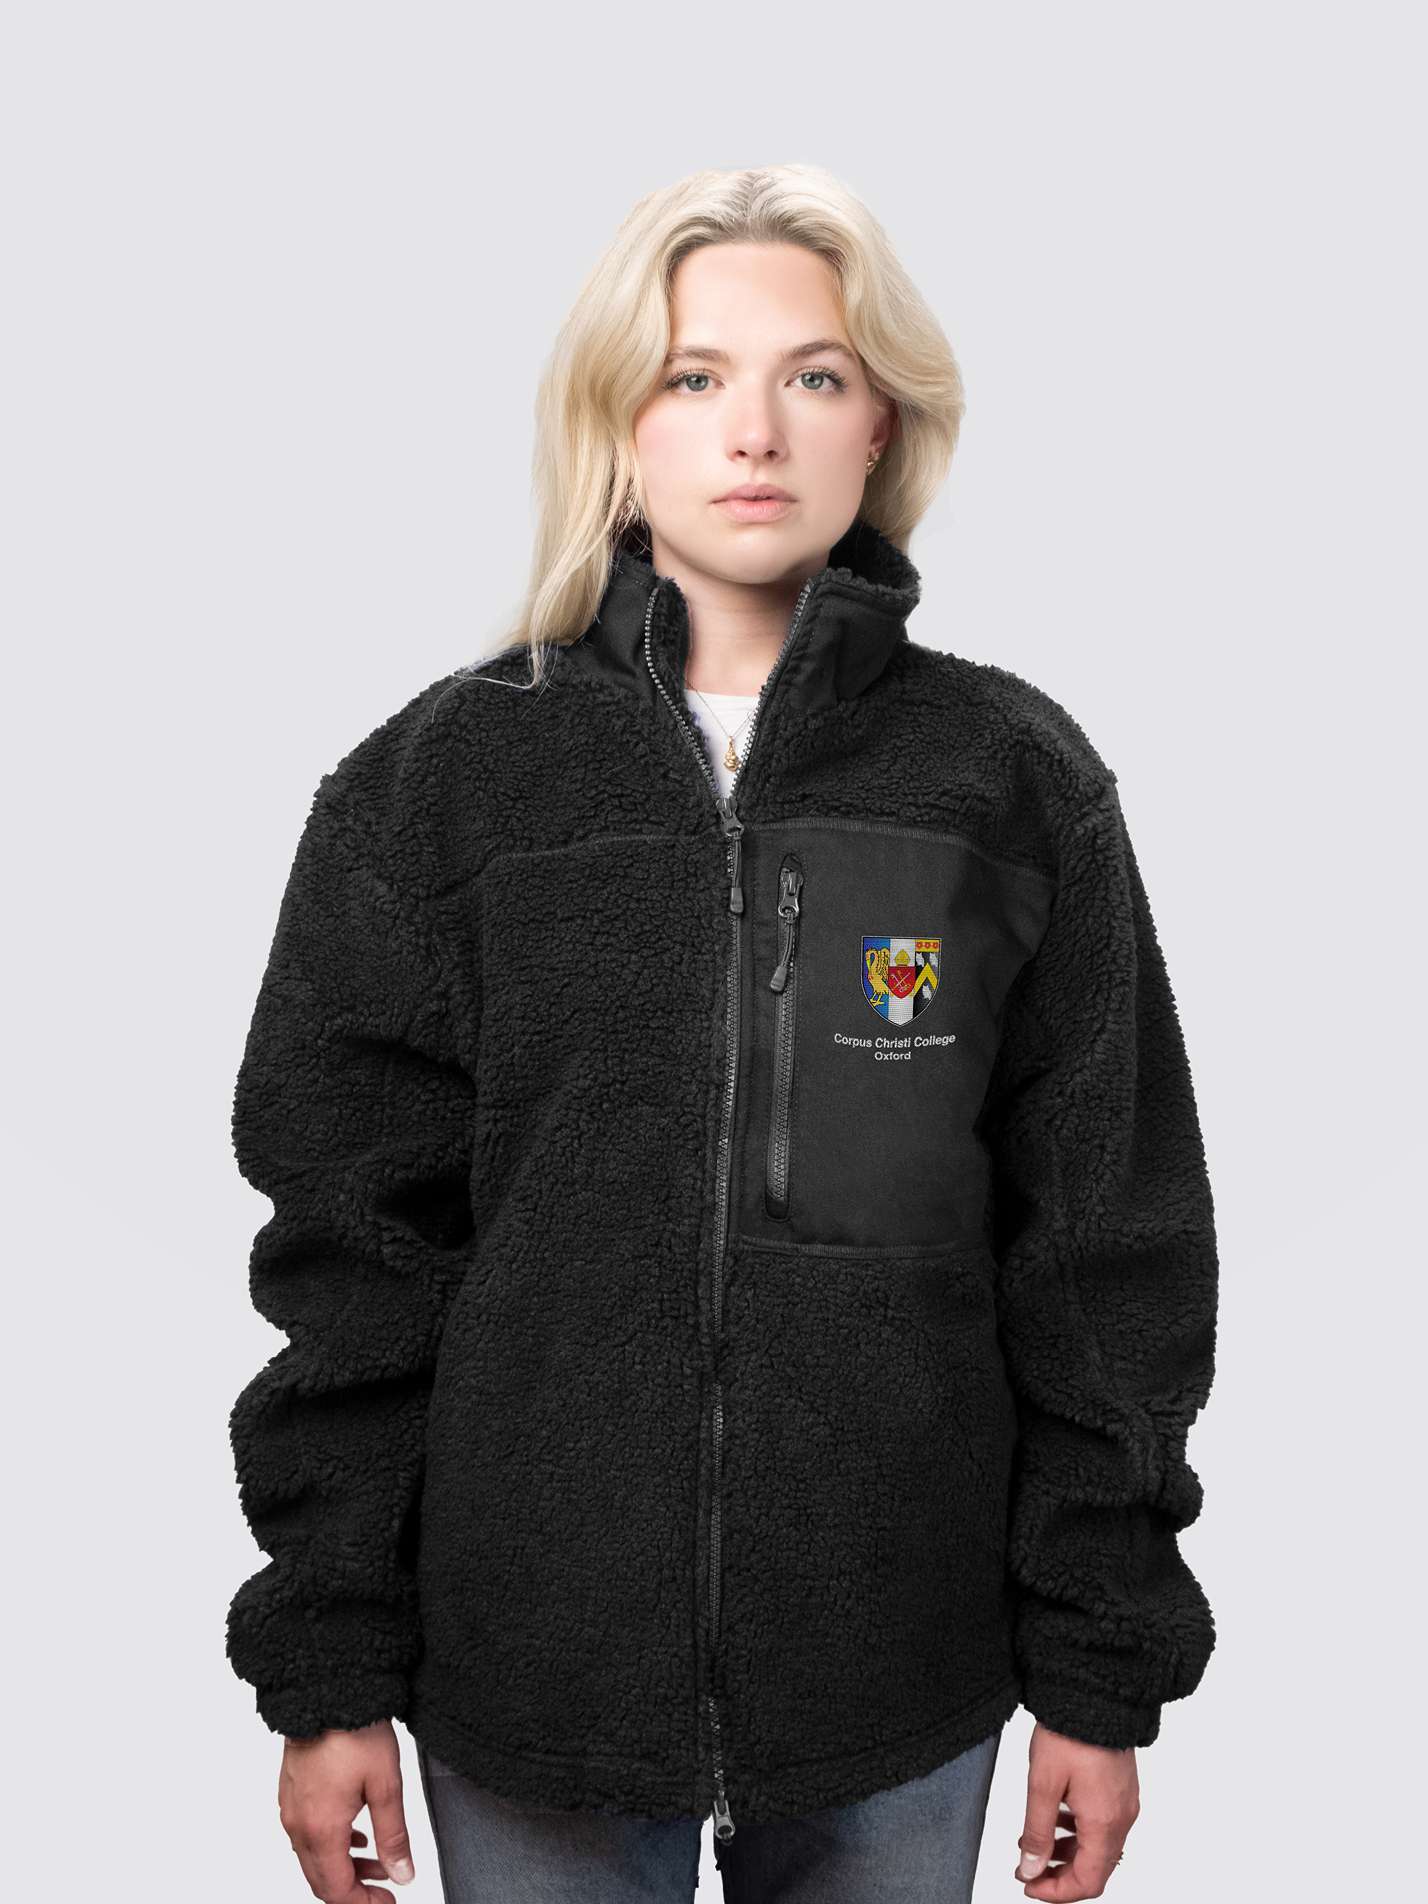 Corpus Christi College Oxford Unisex Fluffy Sherpa Fleece Jacket